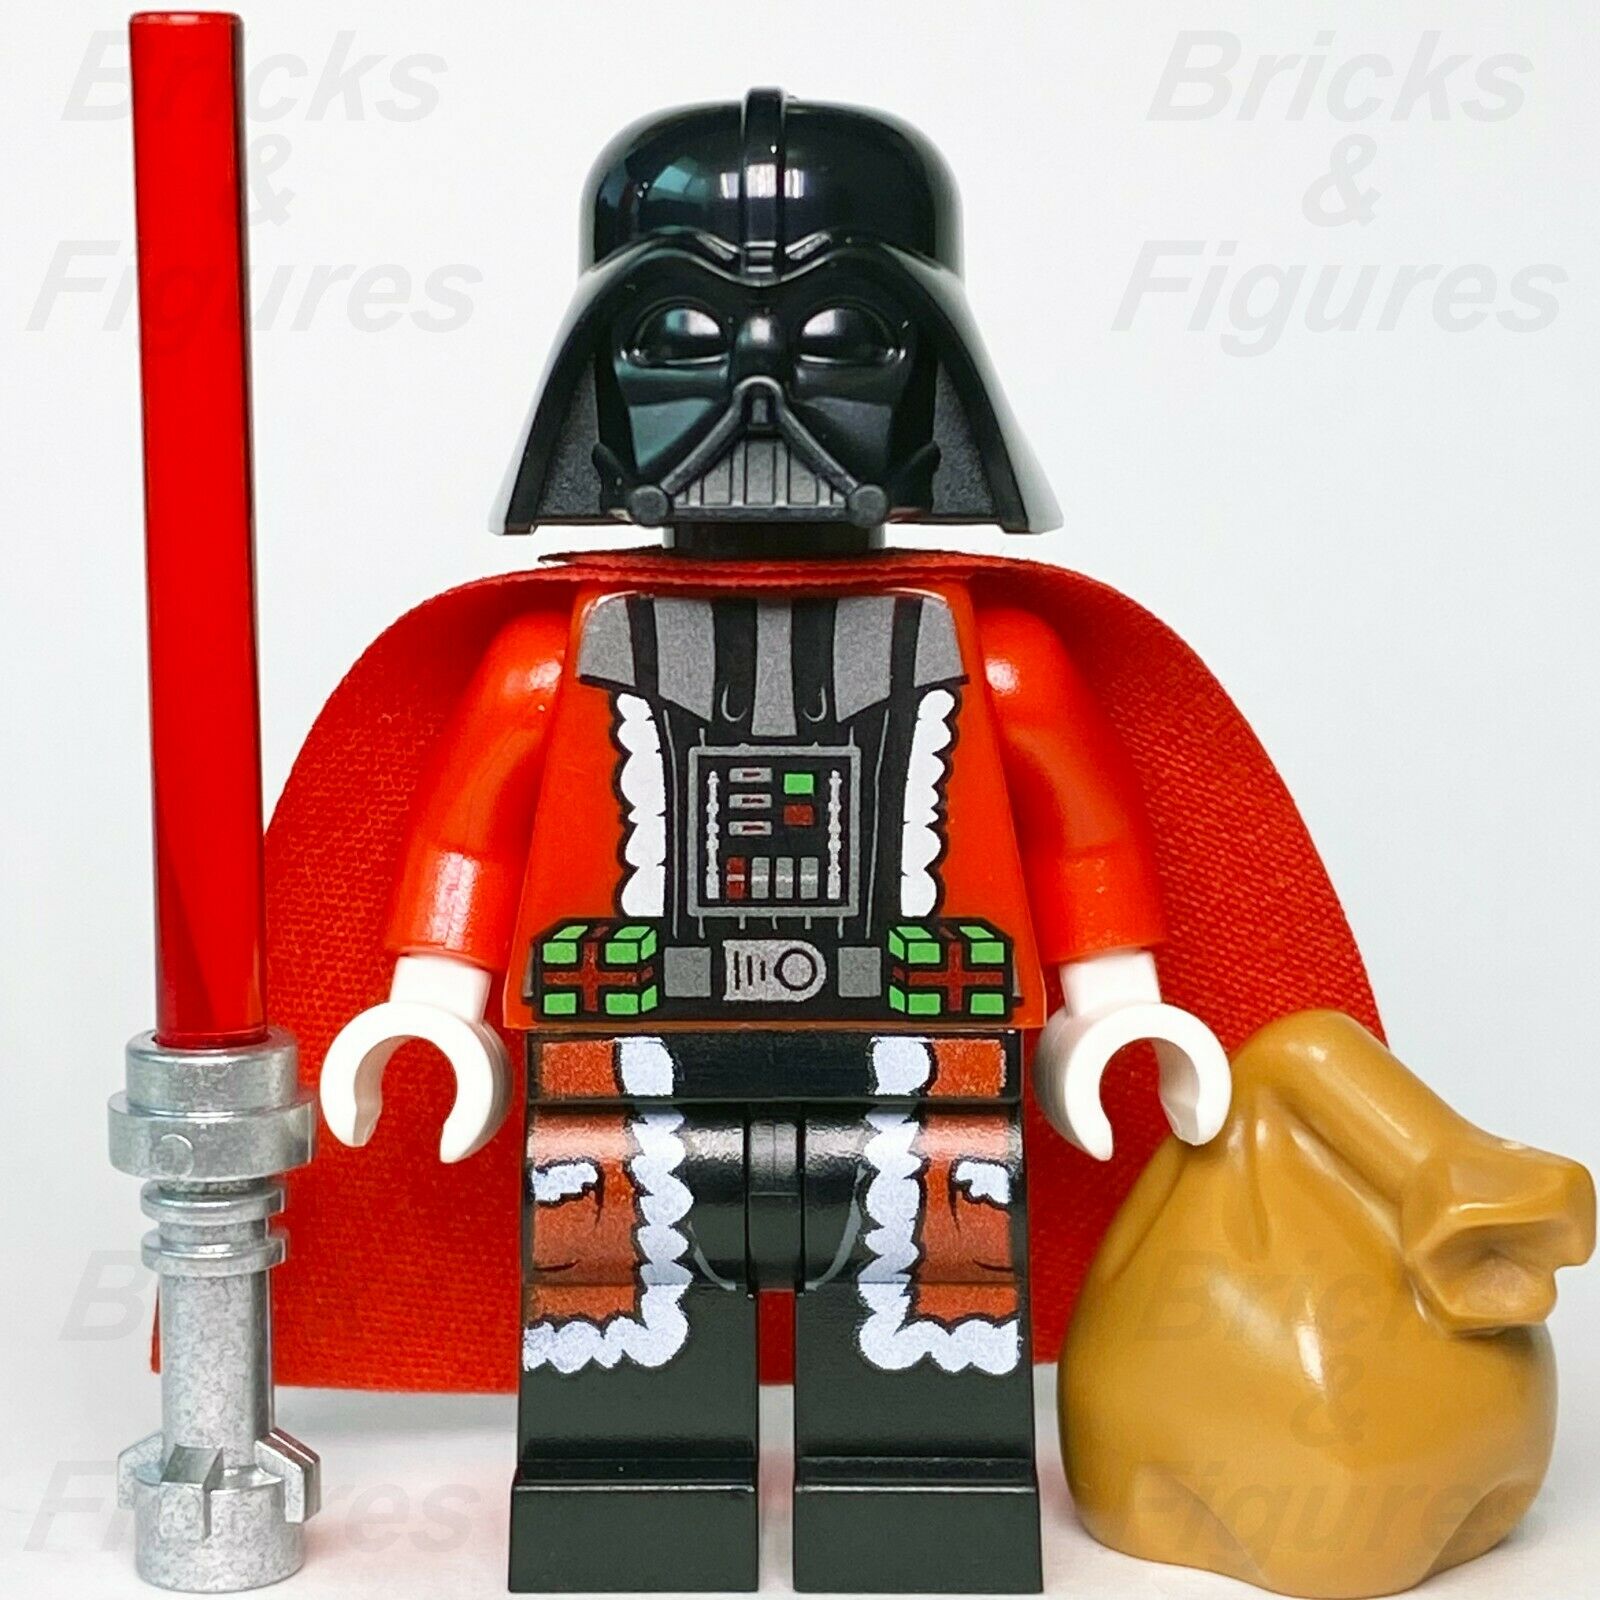 NEW LEGO Santa Yoda minifigure - Star Wars Made Of Genuine LEGO